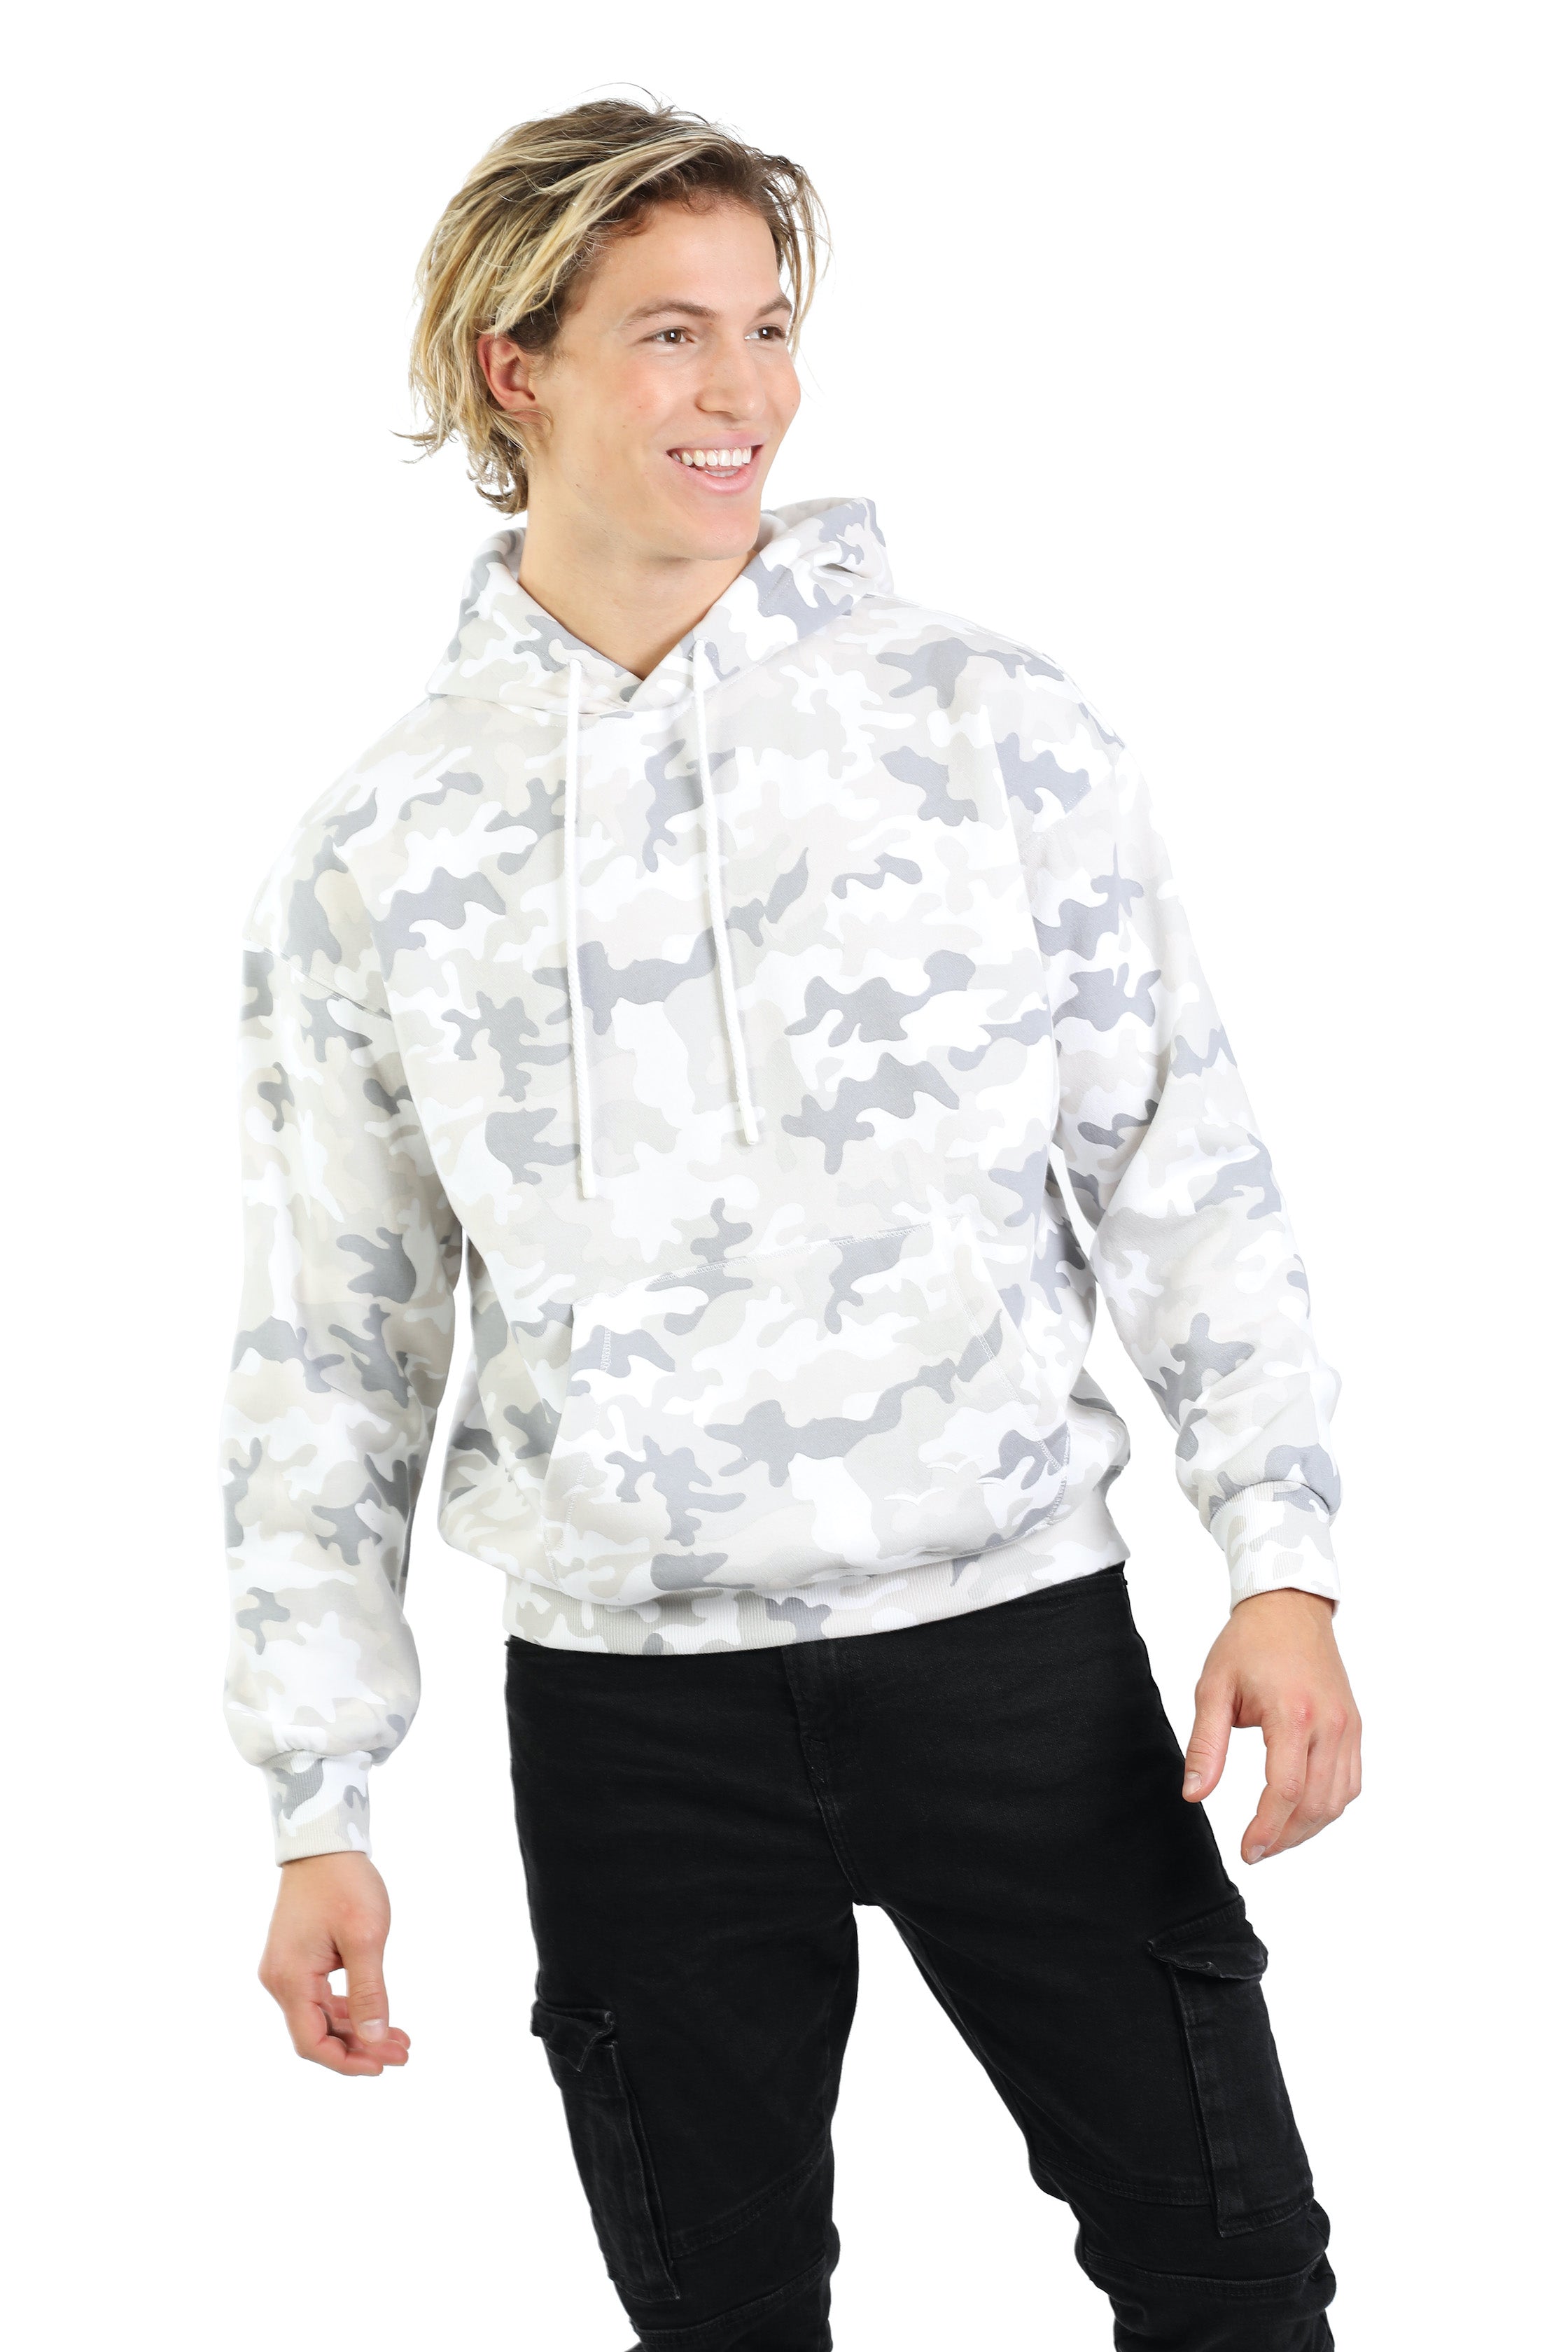 Affordable Wholesale linen capri joggers pants For Trendsetting Looks 